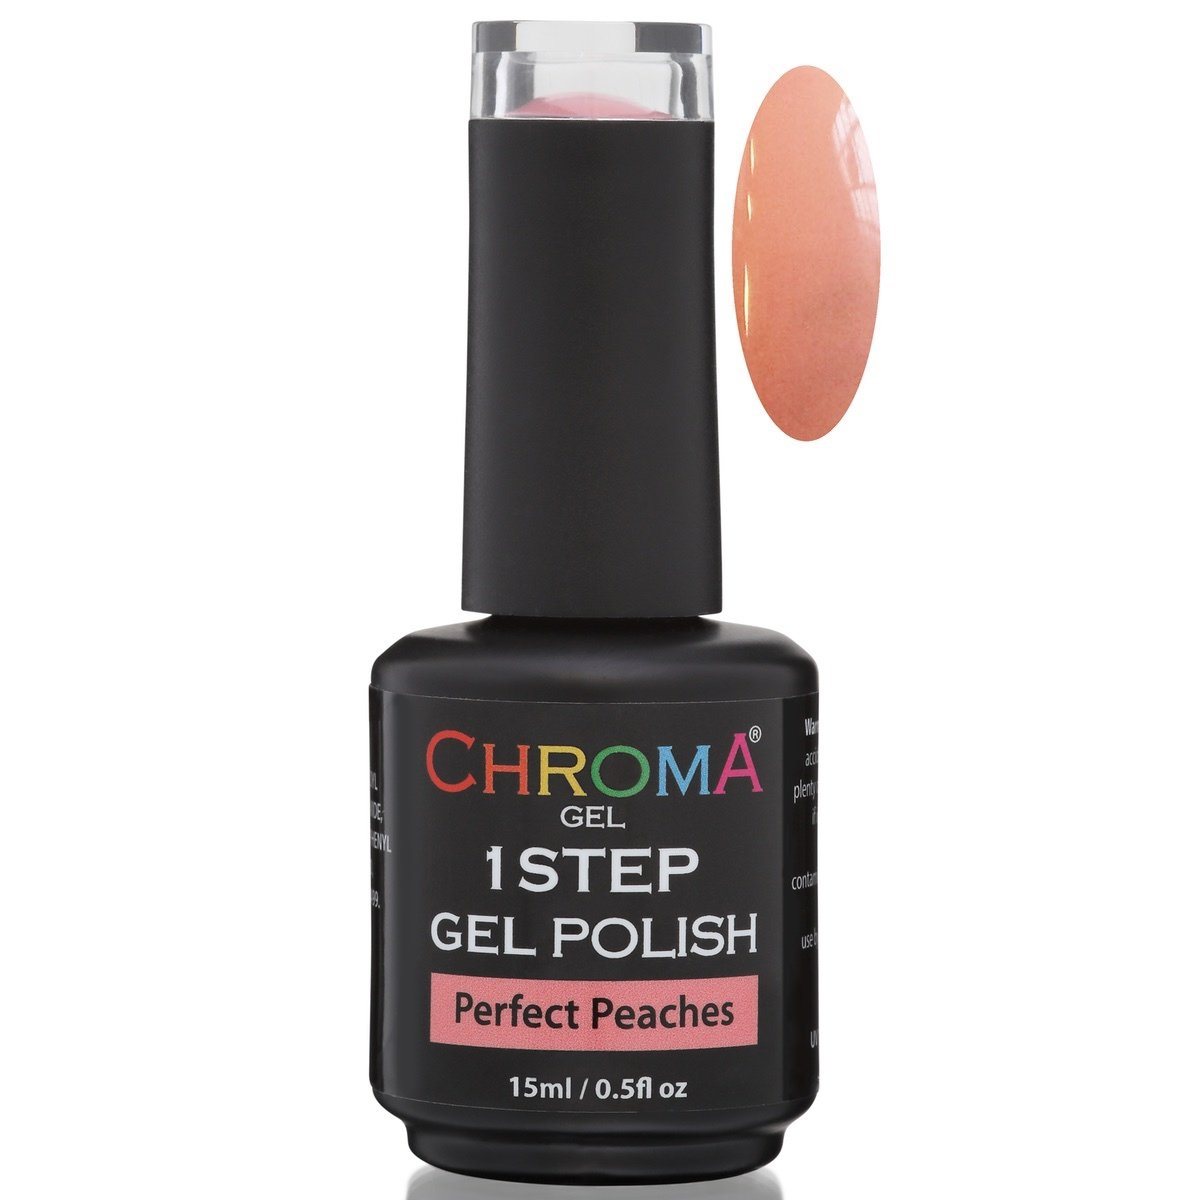 Chroma Gel 1 Step Gel Polish Perfect Peaches No.37 - Beauty Hair Products LtdChroma Gel